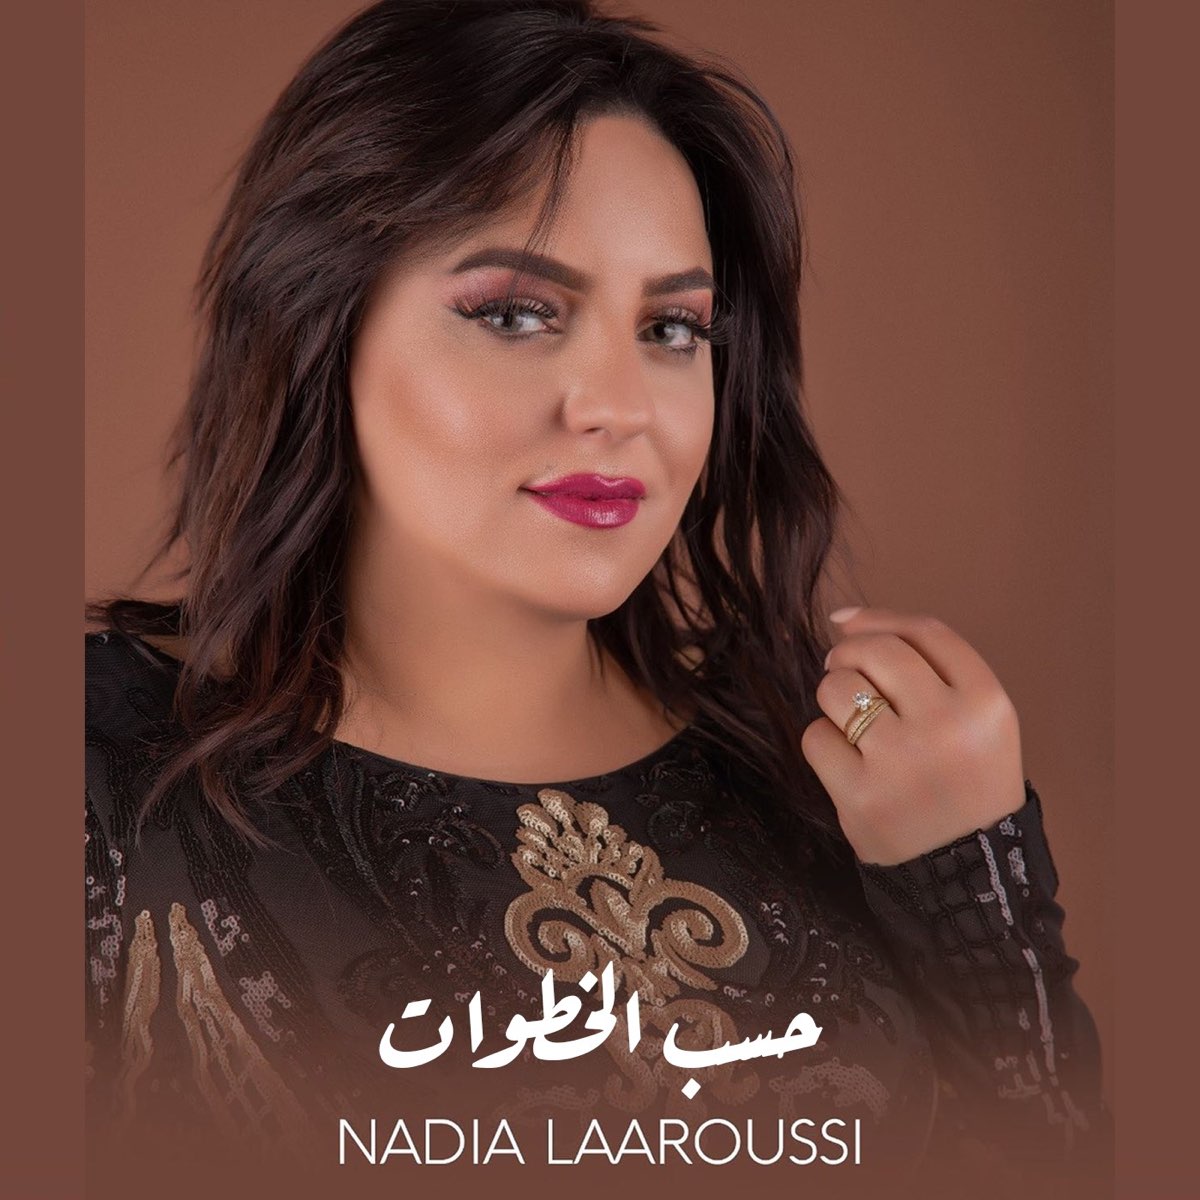 ‎Hsab Lkhatwate - Single by Nadia Laaroussi on Apple Music